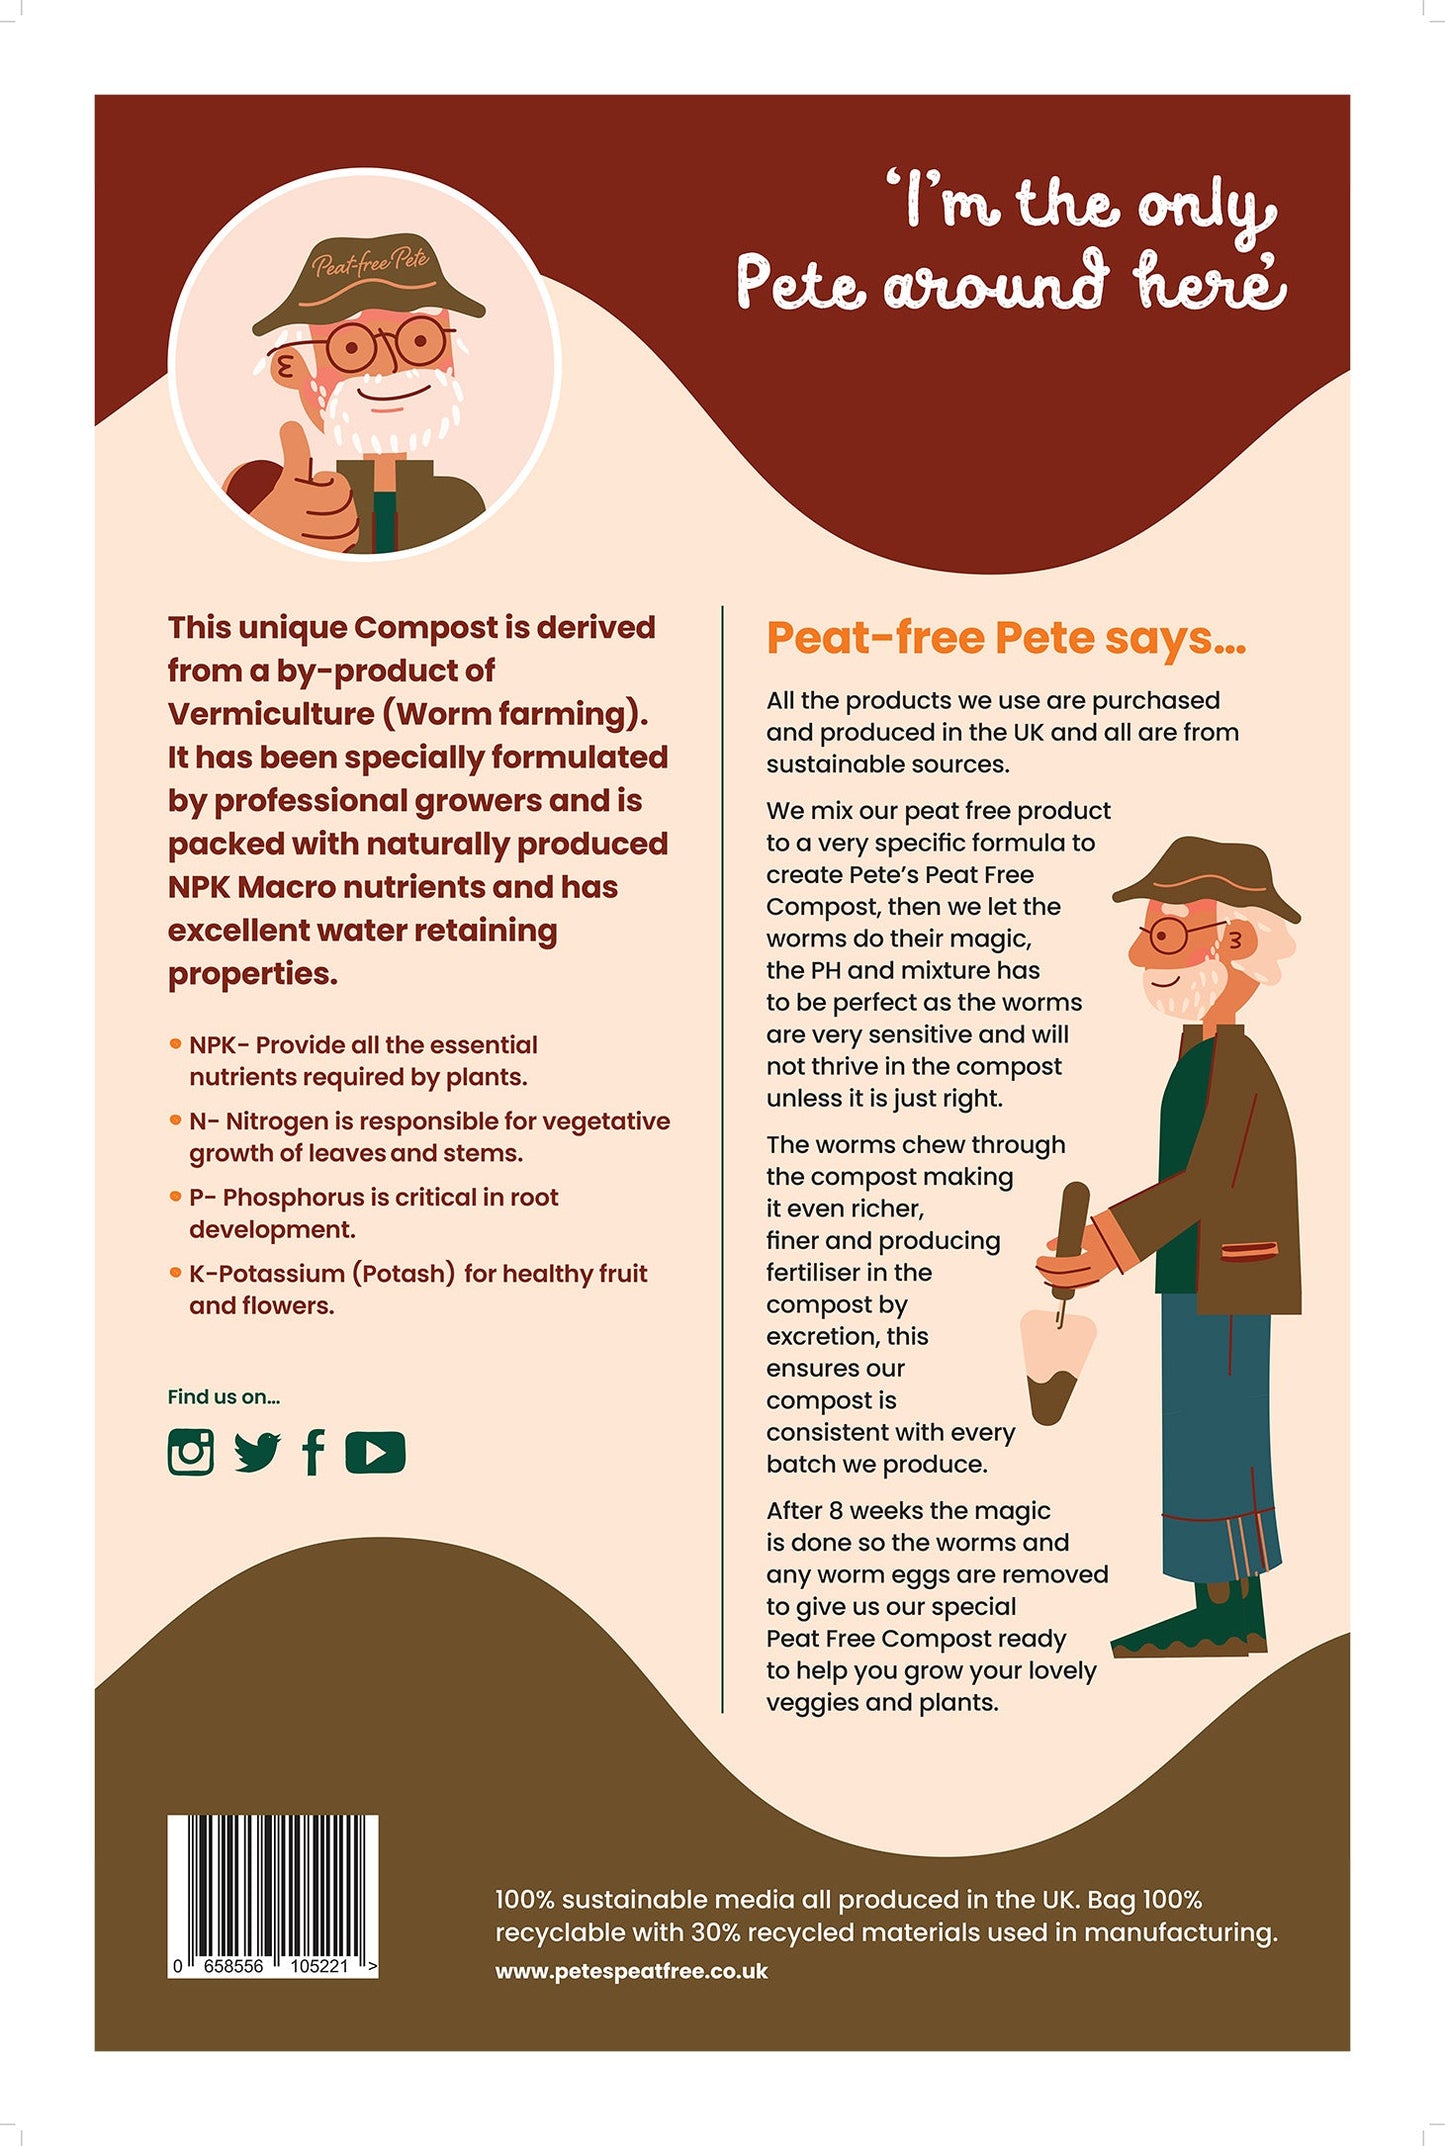 2 x Pete's Peat Free Multipurpose Compost 30ltr